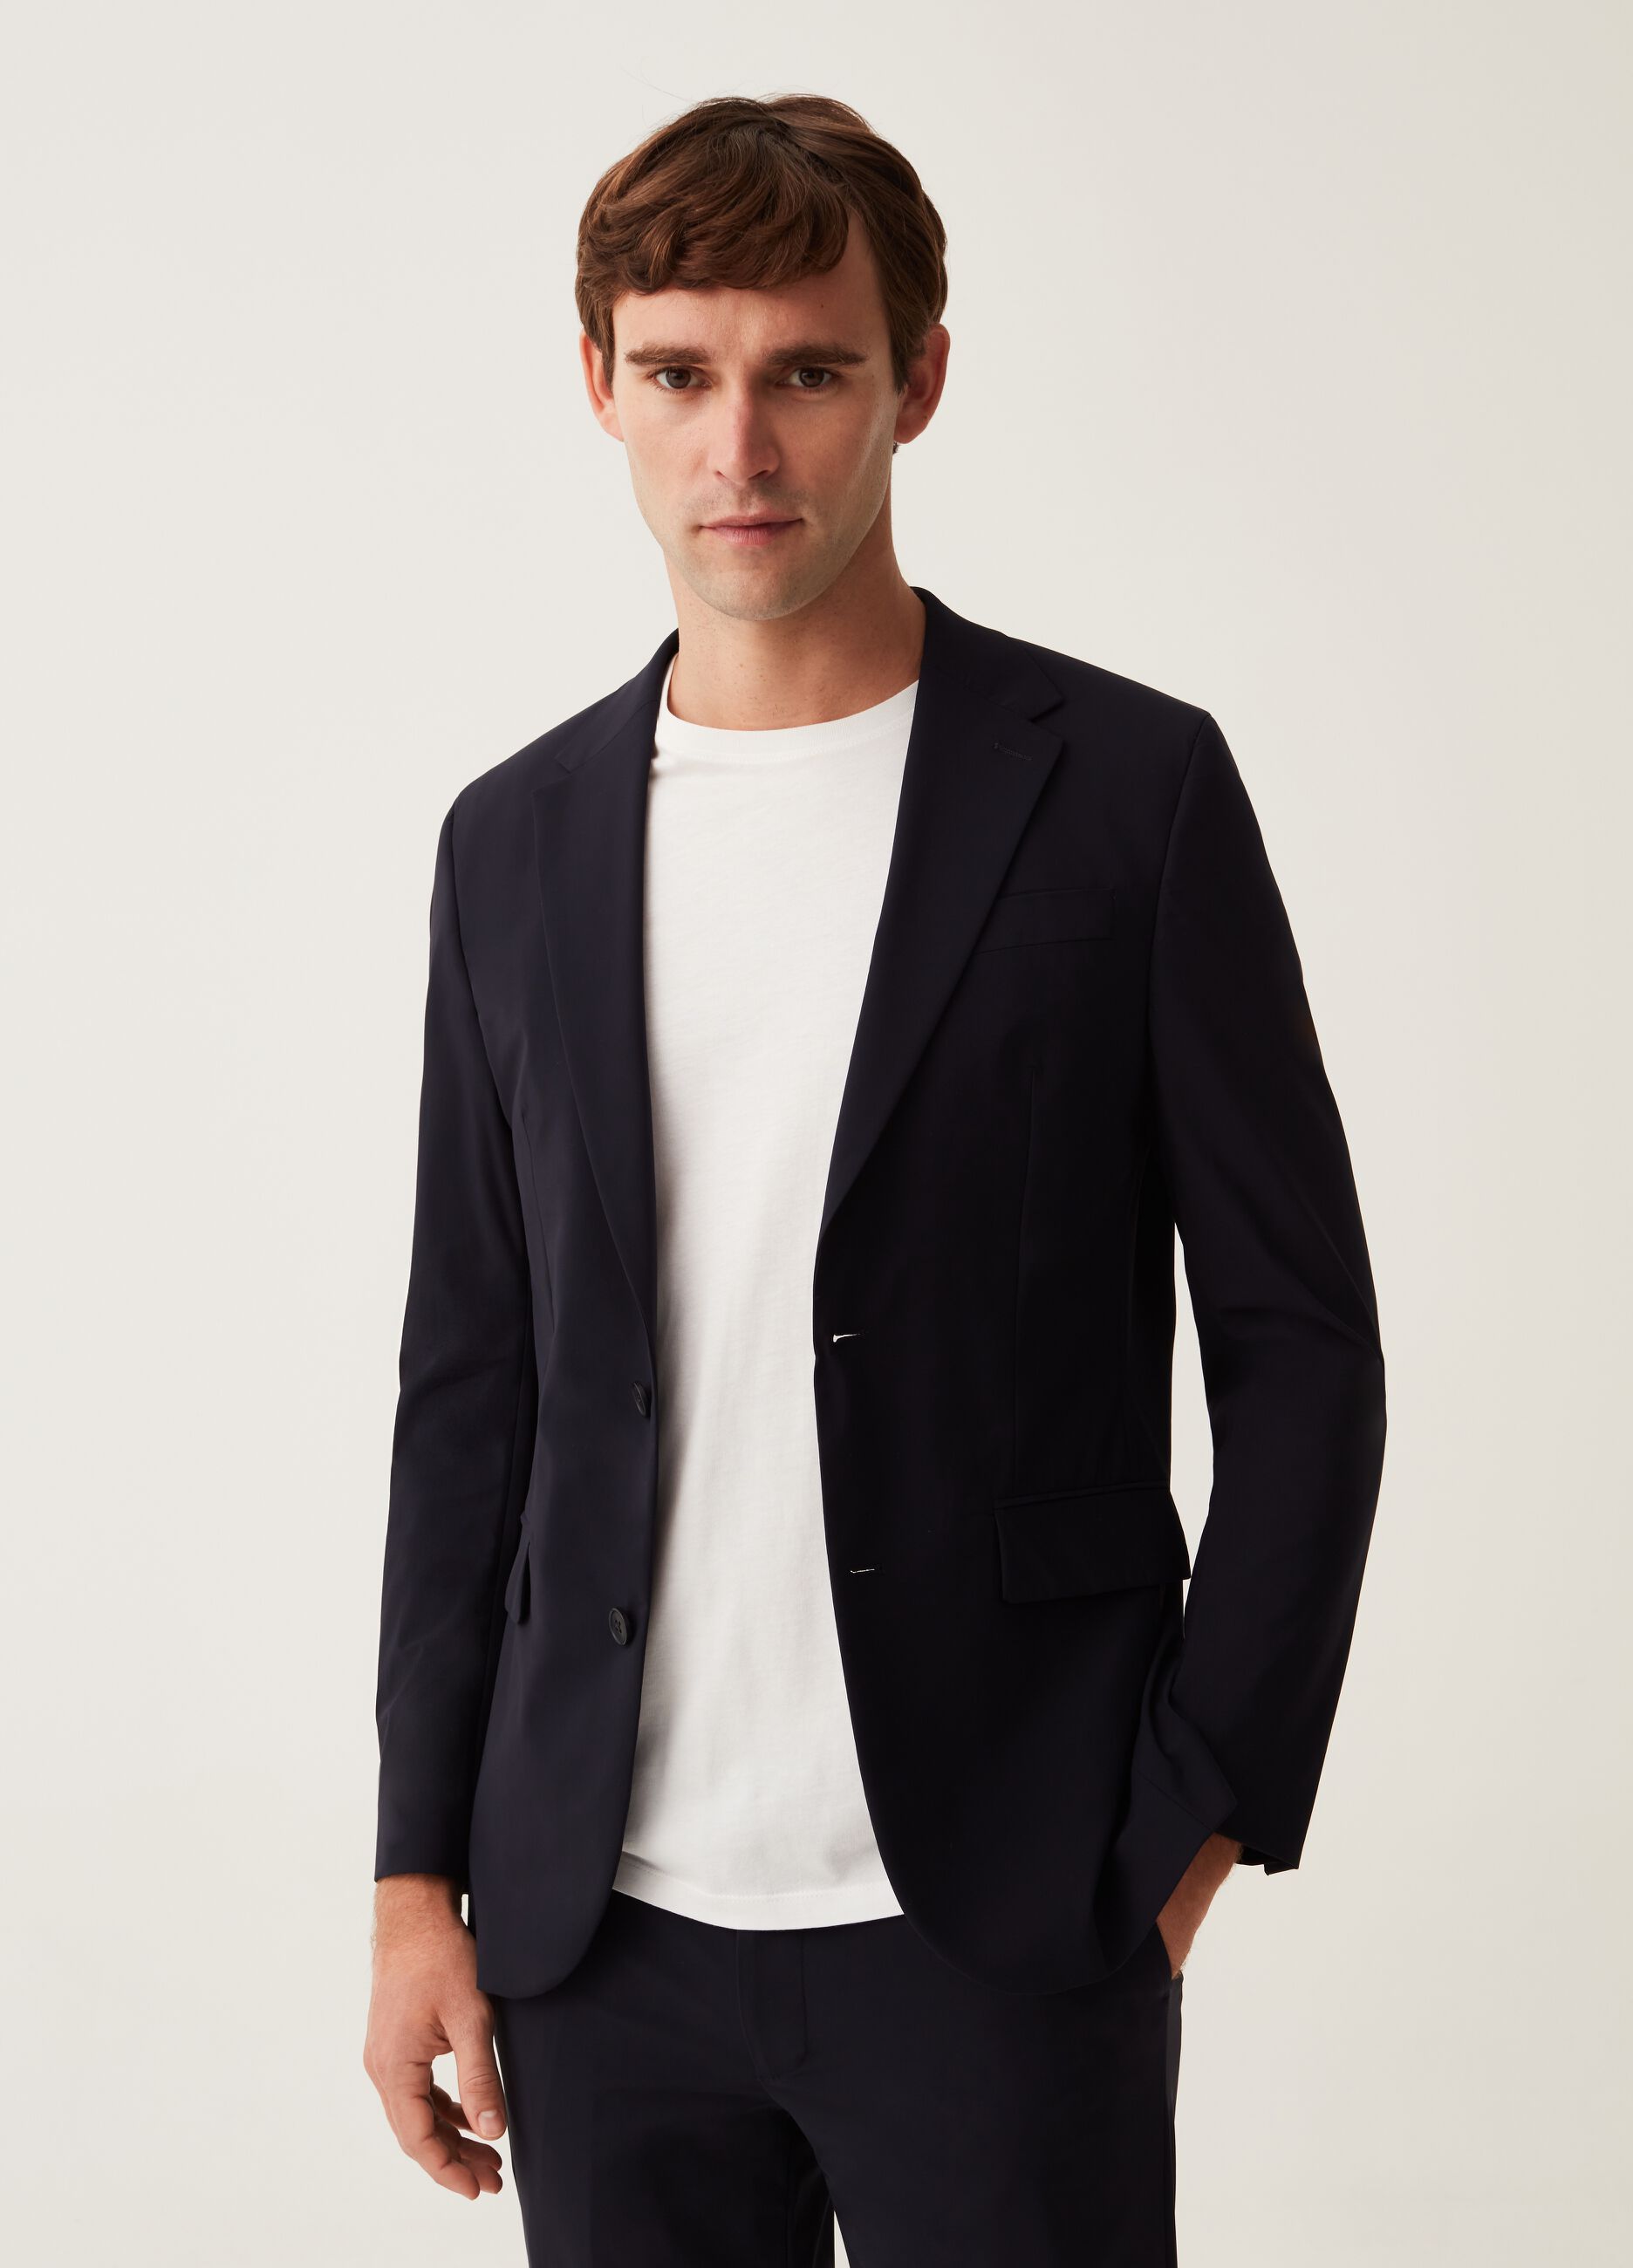 Slim-fit blazer in navy blue technical fabric